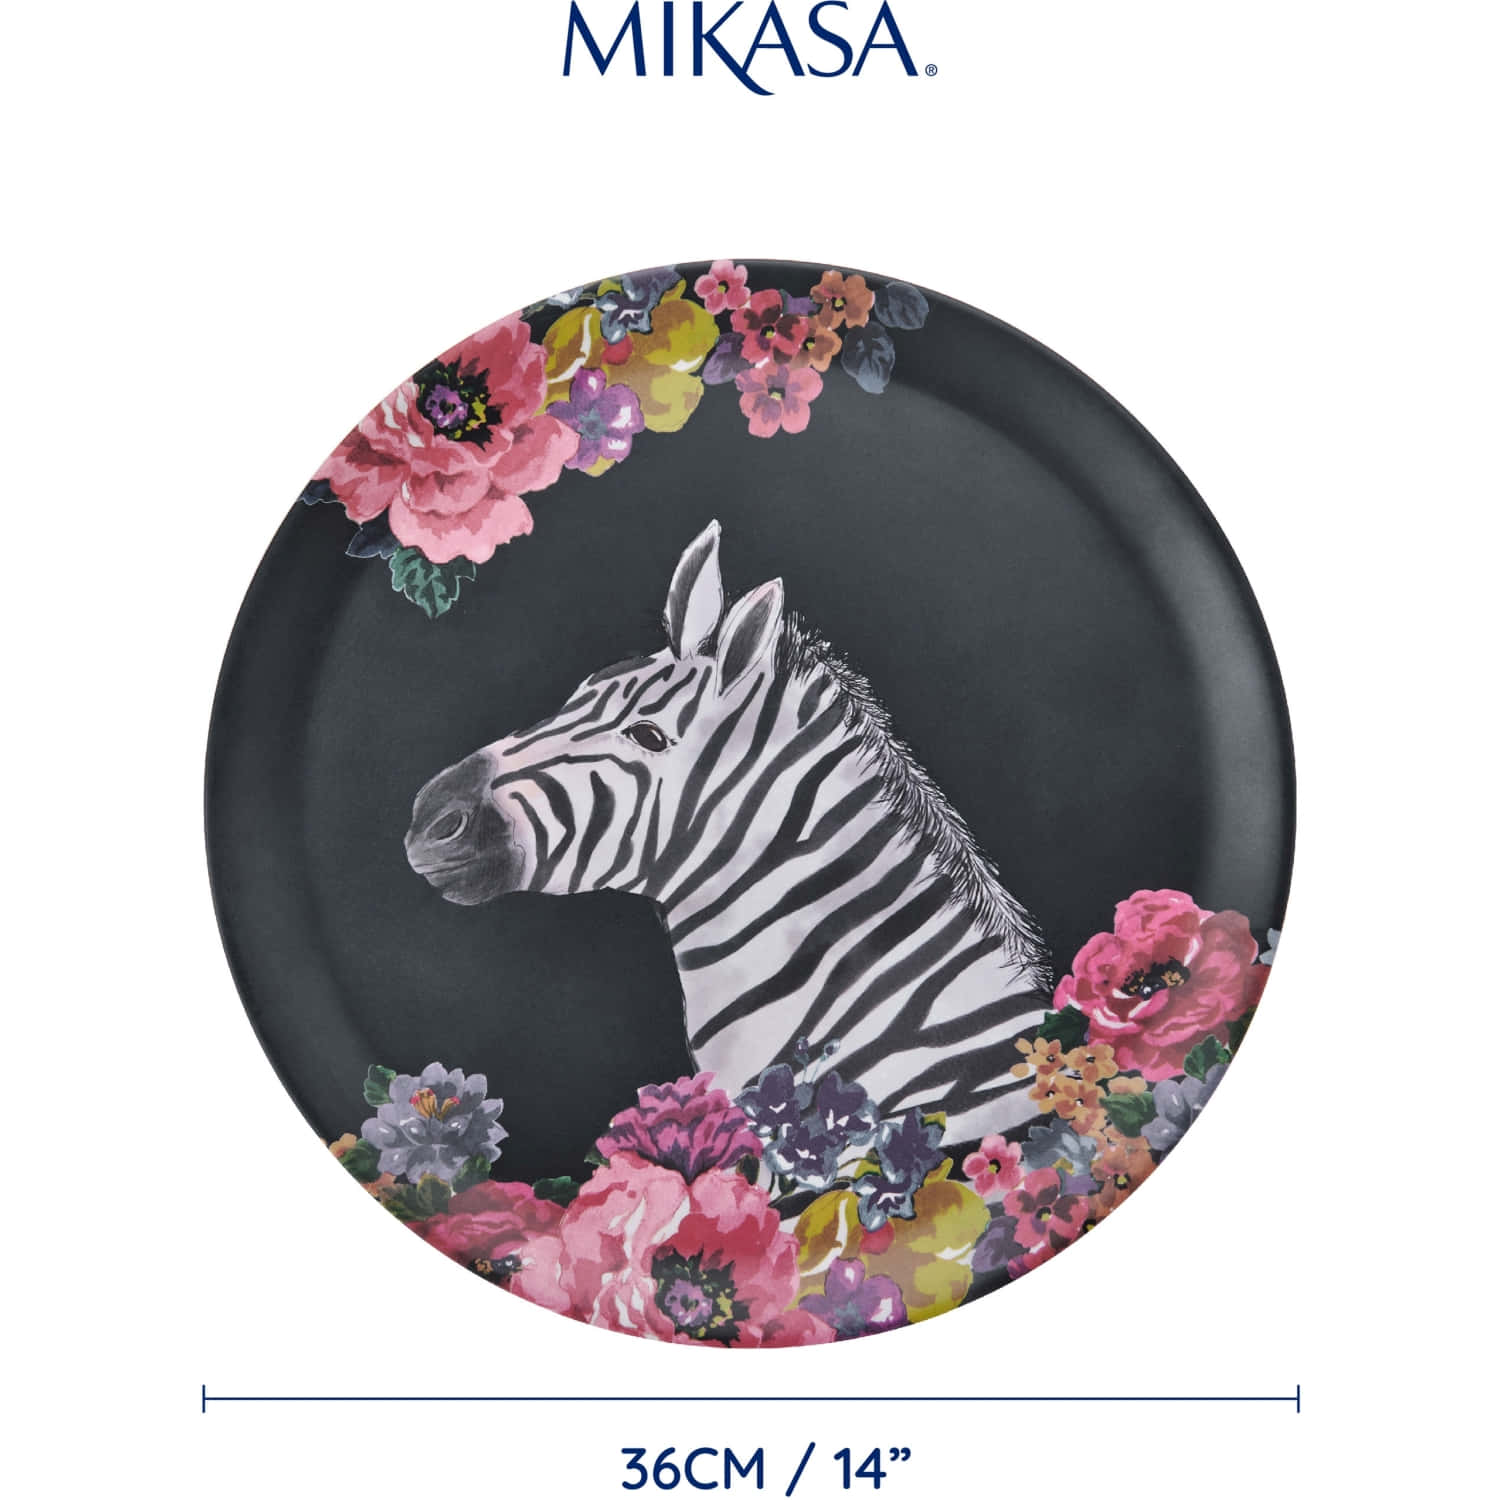 Mikasa Wild at Heart Melamine 36cm Round Tray Zebra